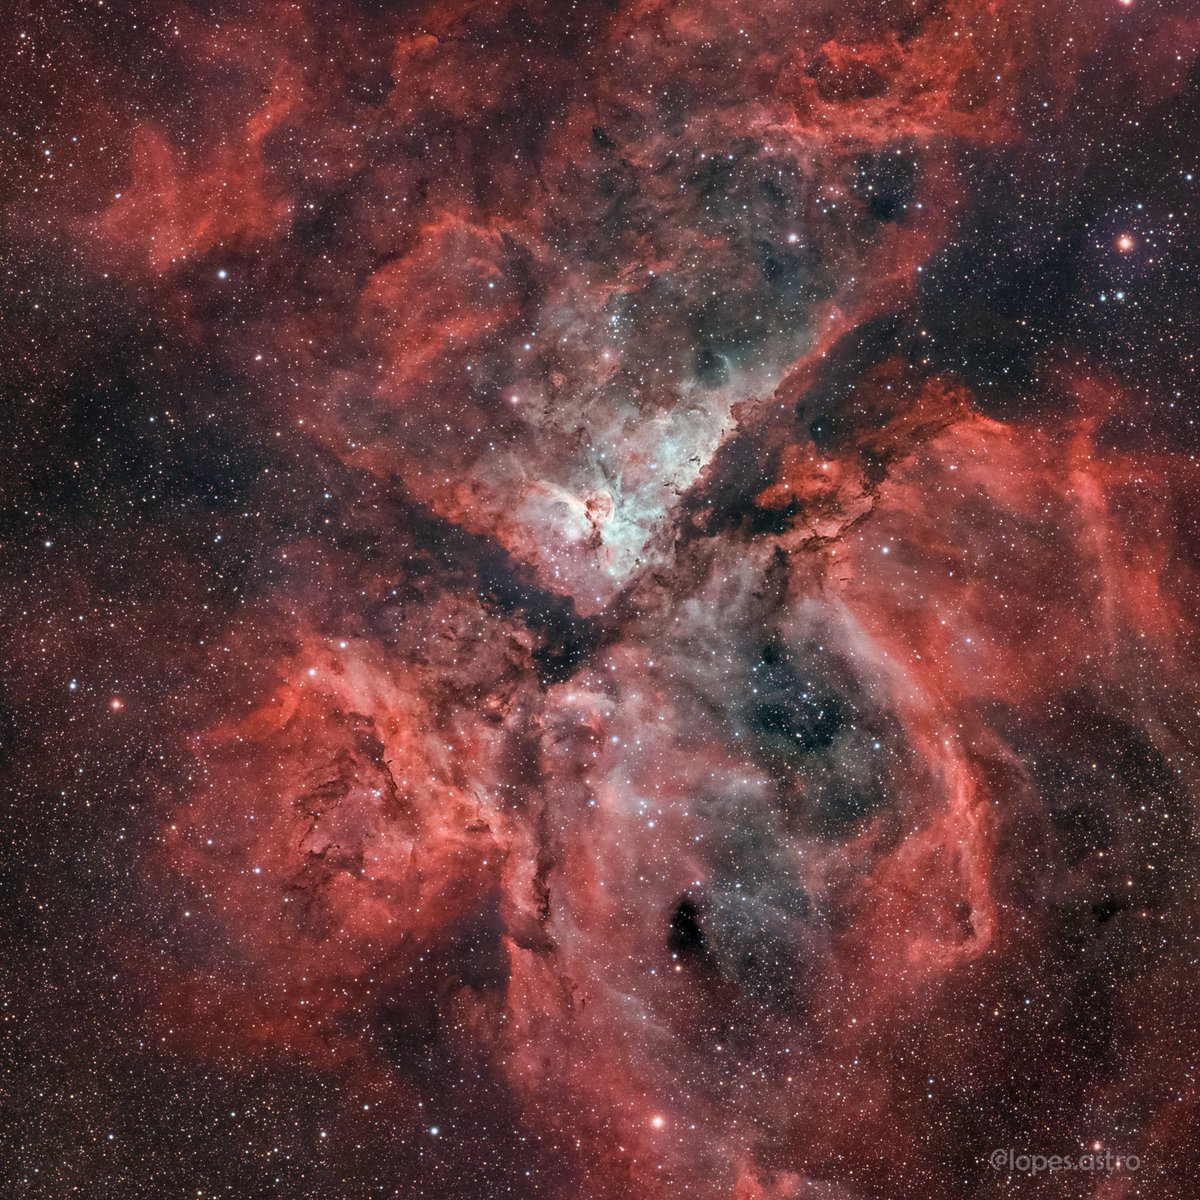 The Great Carina Nebula Image Credit & Copyright: Demison Lopes #AstroFotografia #AstroPhotography #Astronomia #Astronomy